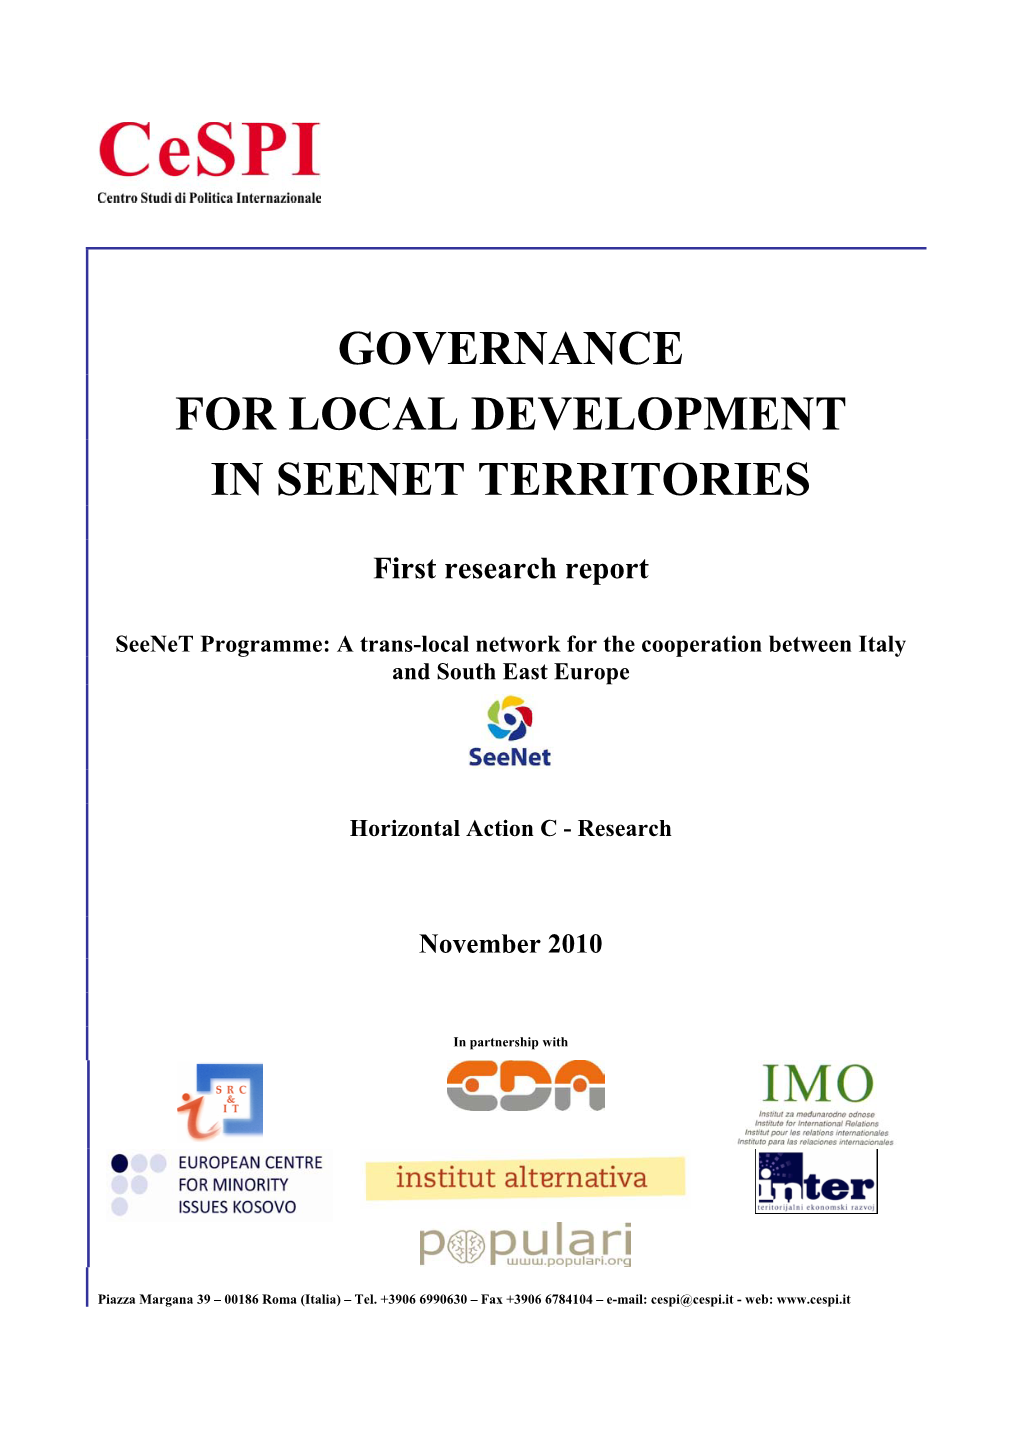 Governance for Local Development in Seenet Territories